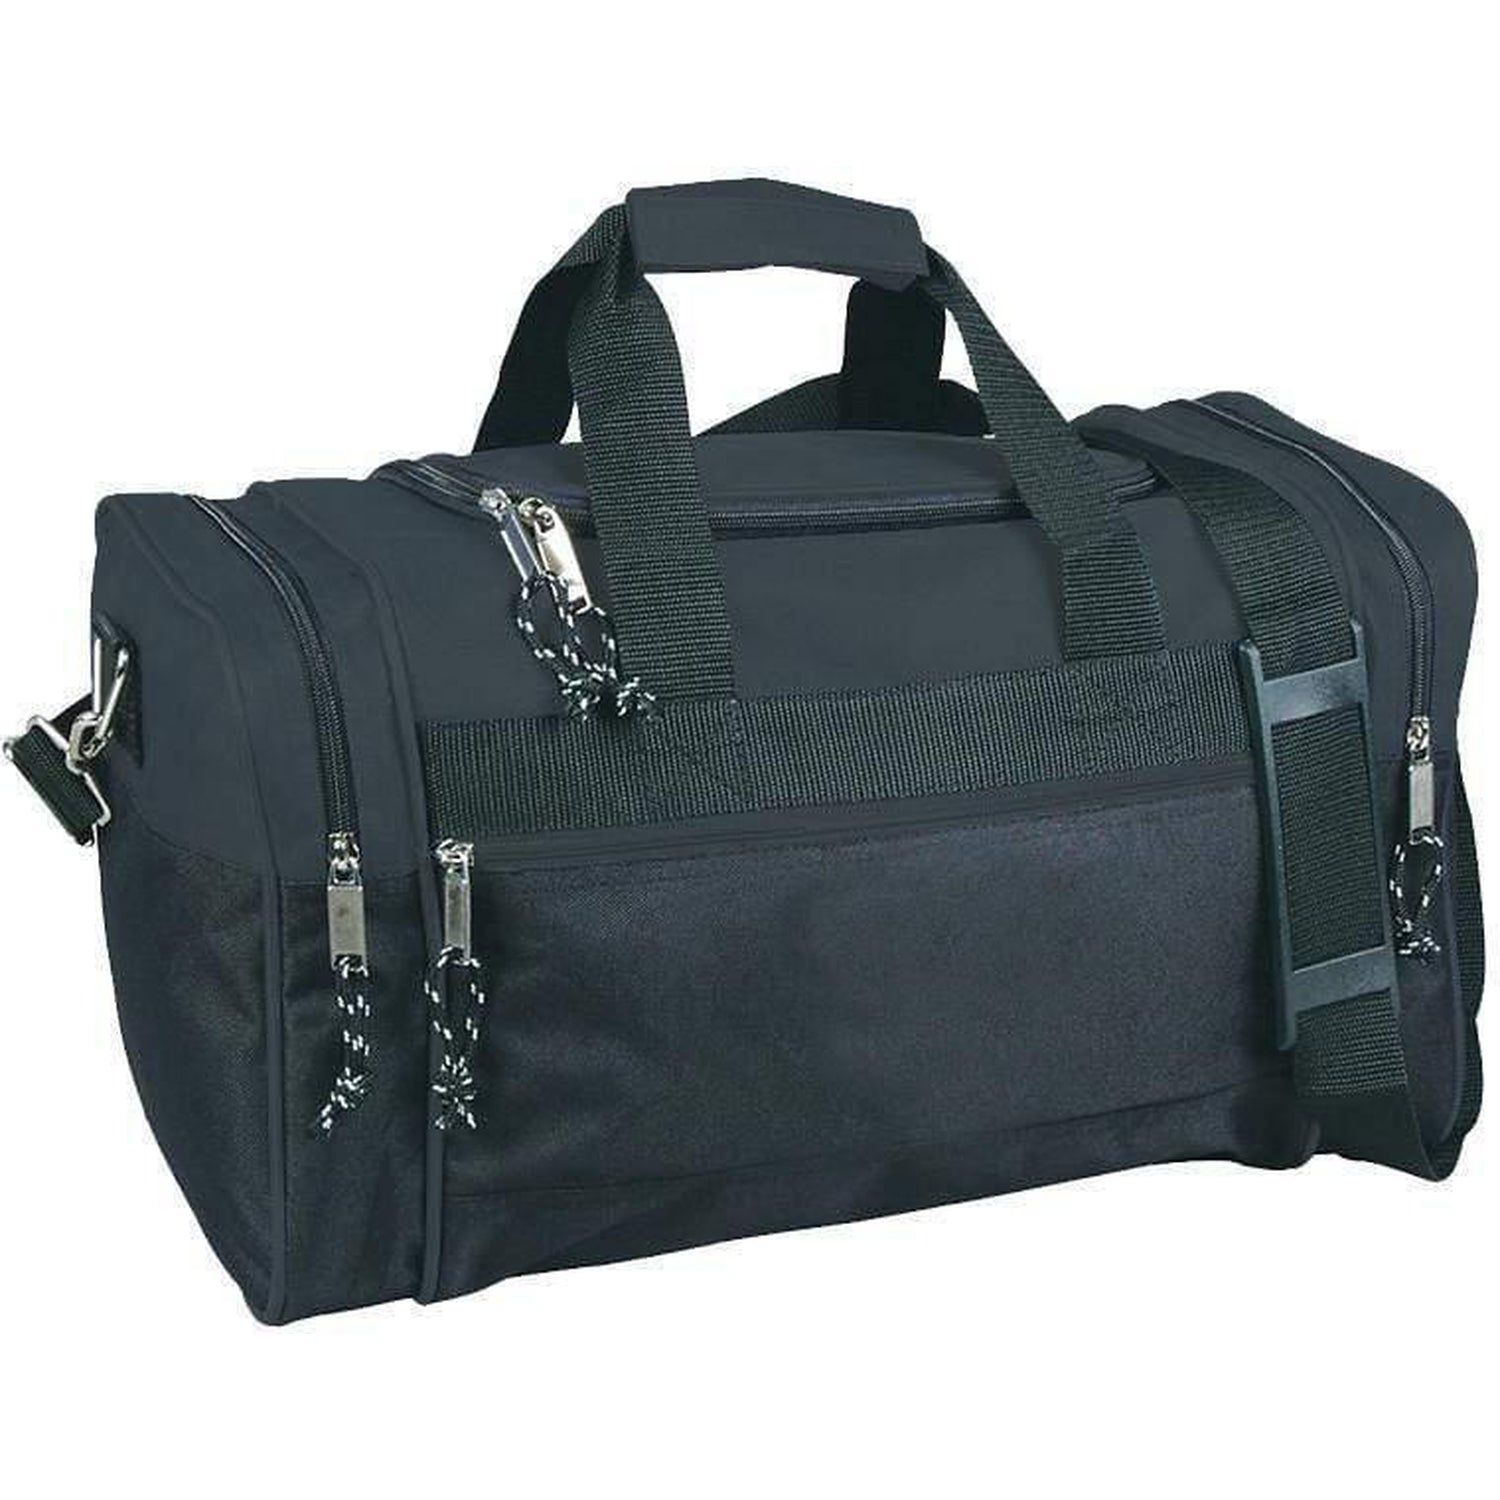 Wholesale Duffle Bags - Zippered Gym Travel Duffle Bags in Bulk – BagzDepot™